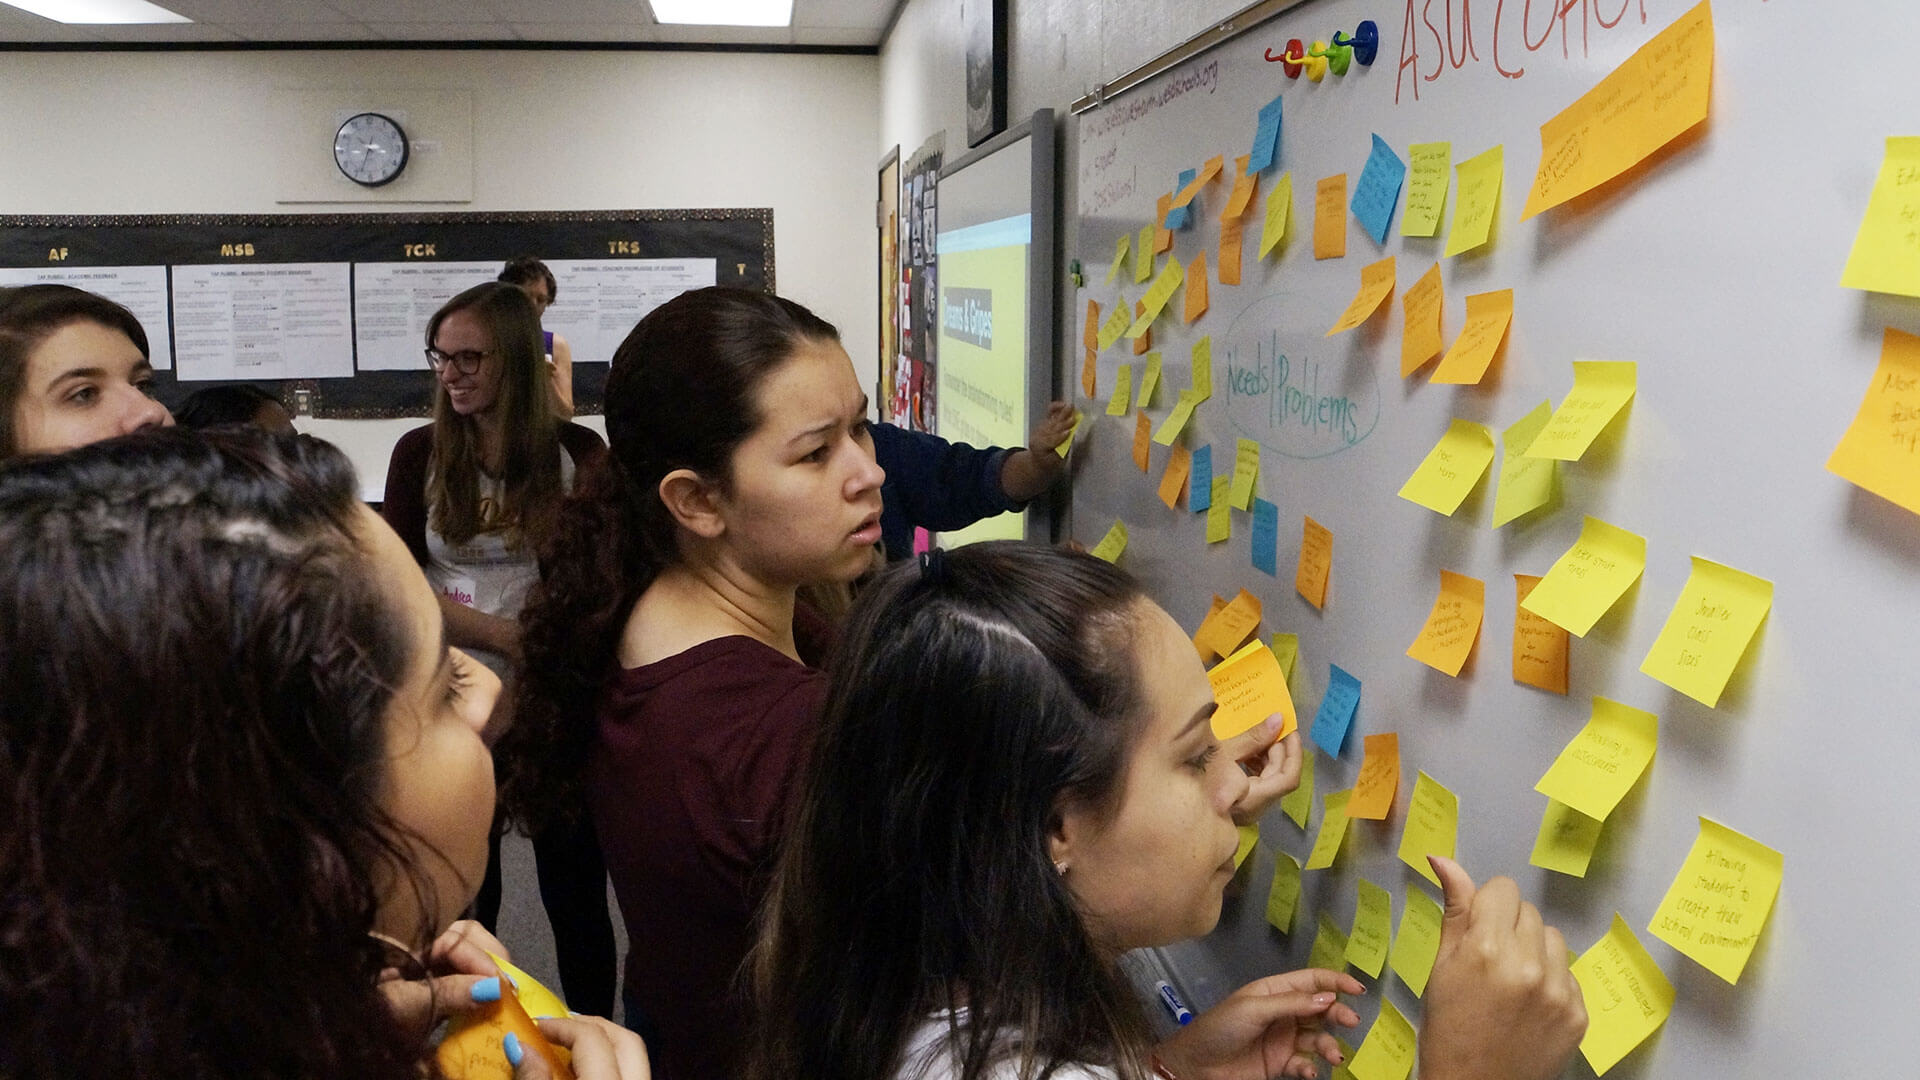 
		Washington Elementary teacher candidates put sticky notes on a whiteboard		